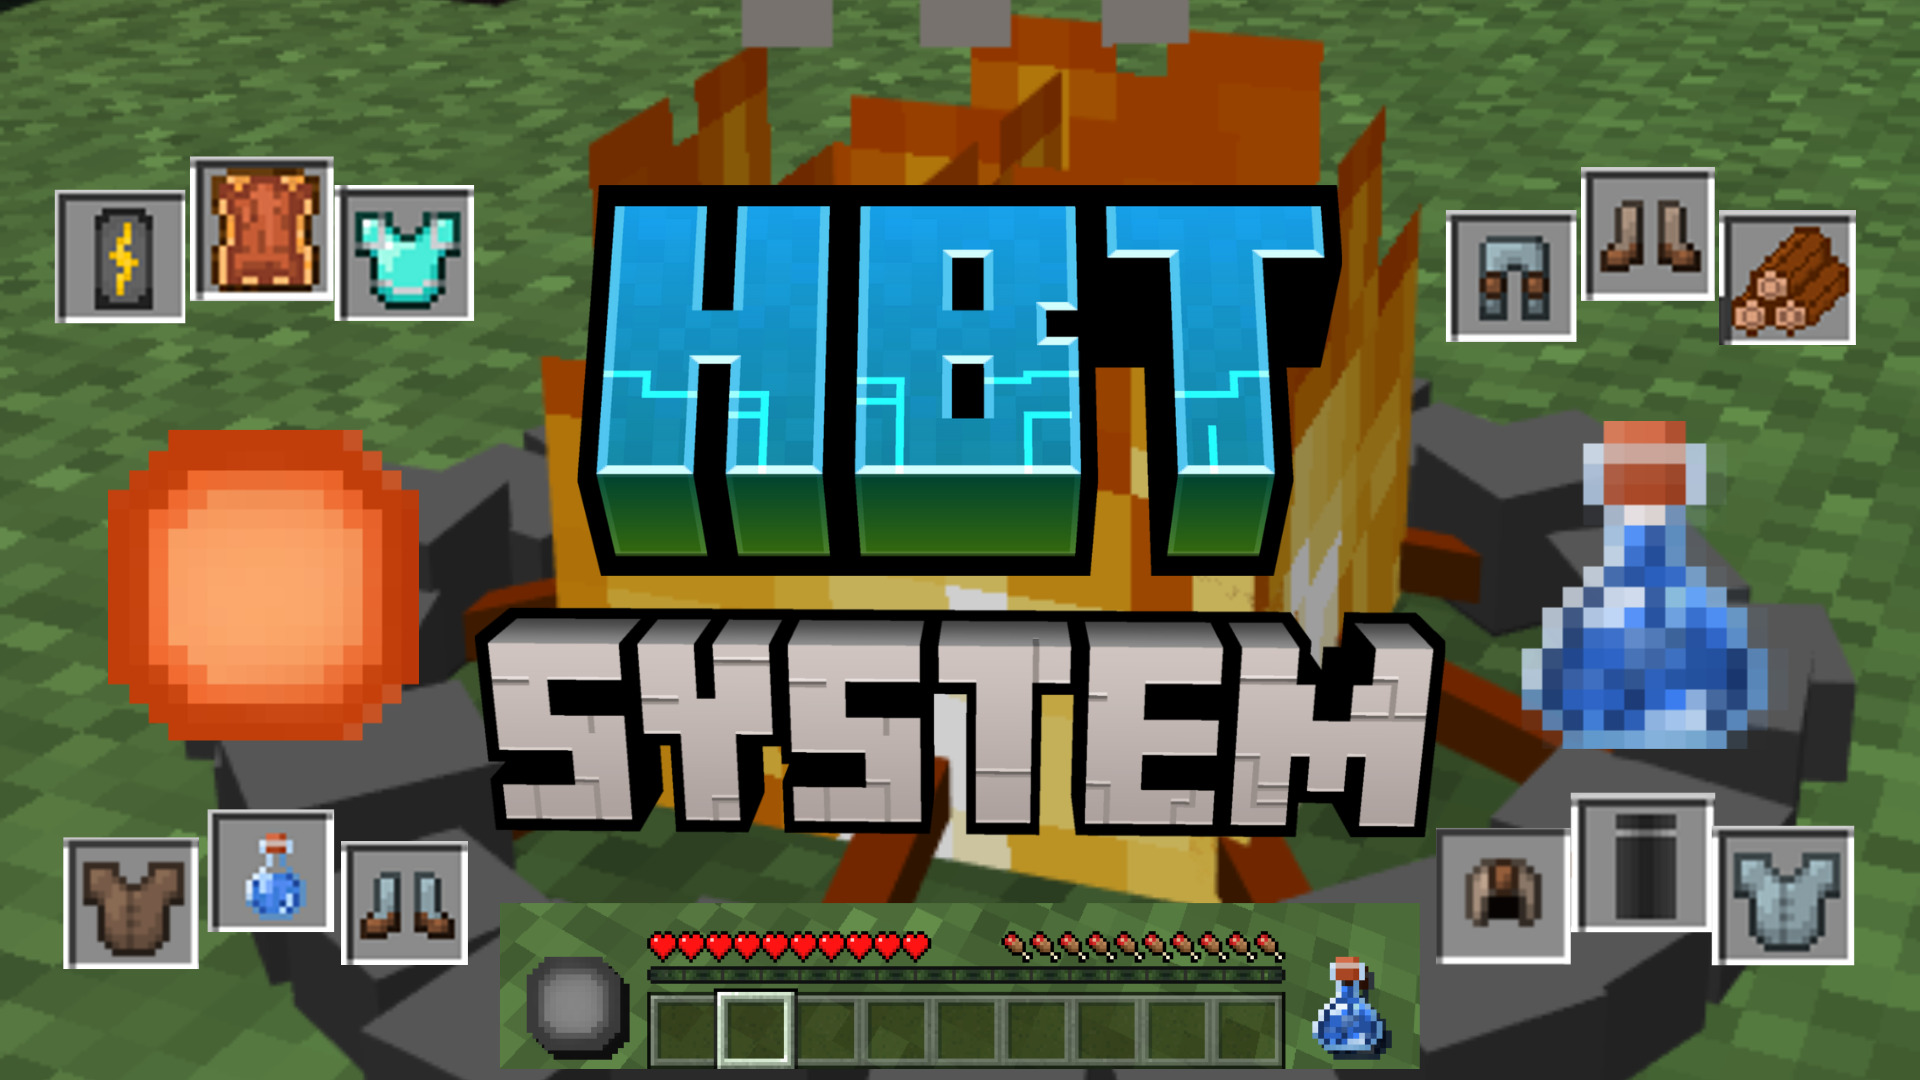 HBTSystem-1e96dc59